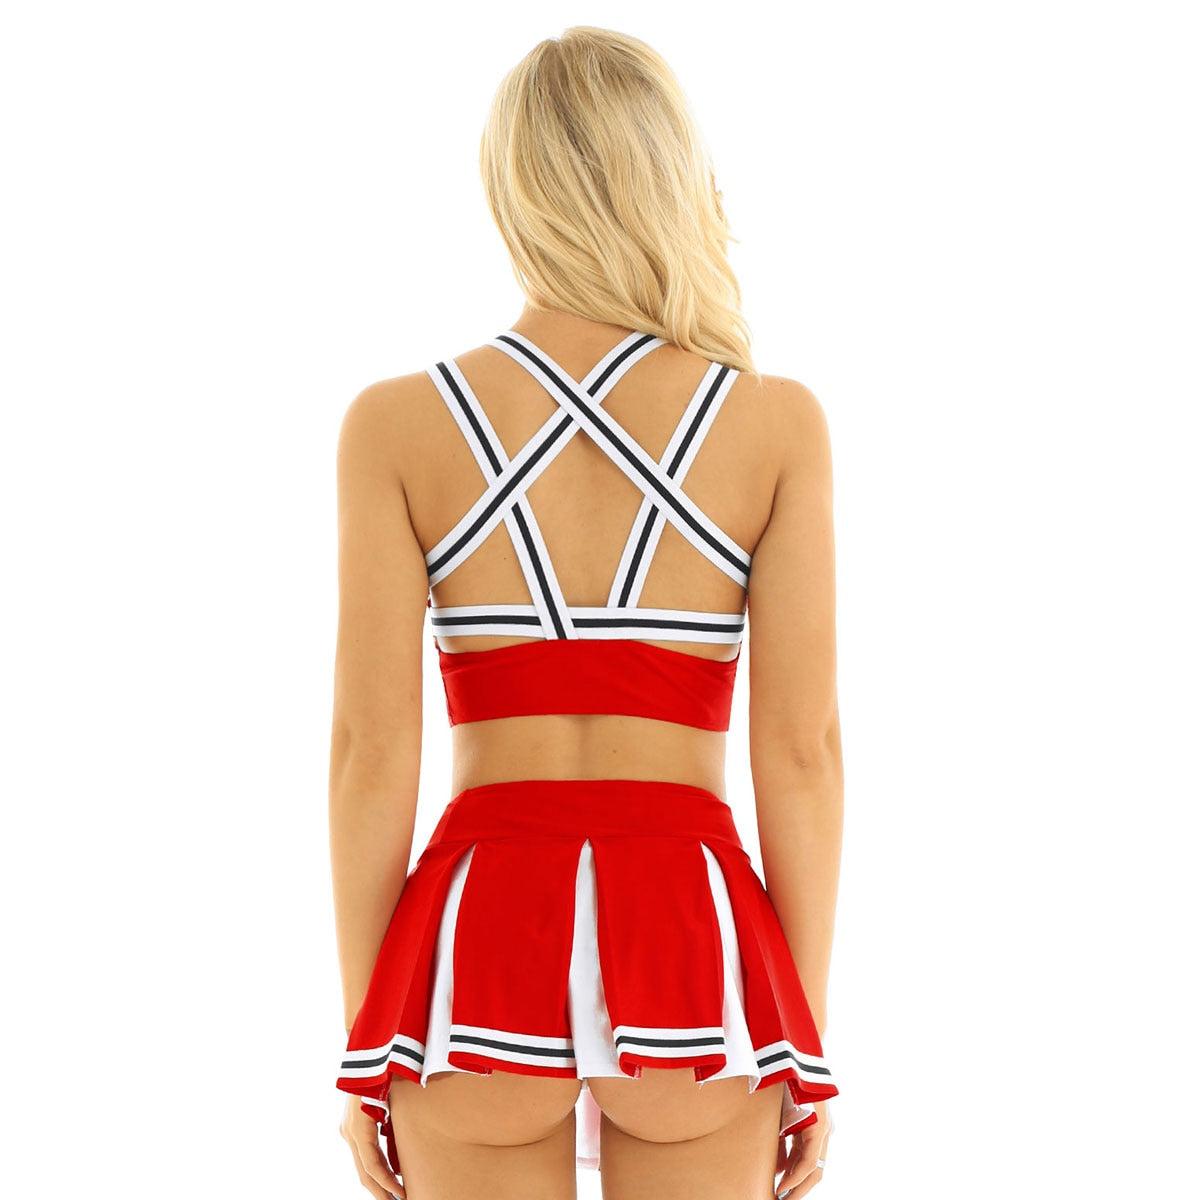 Cheerleader Costume Set